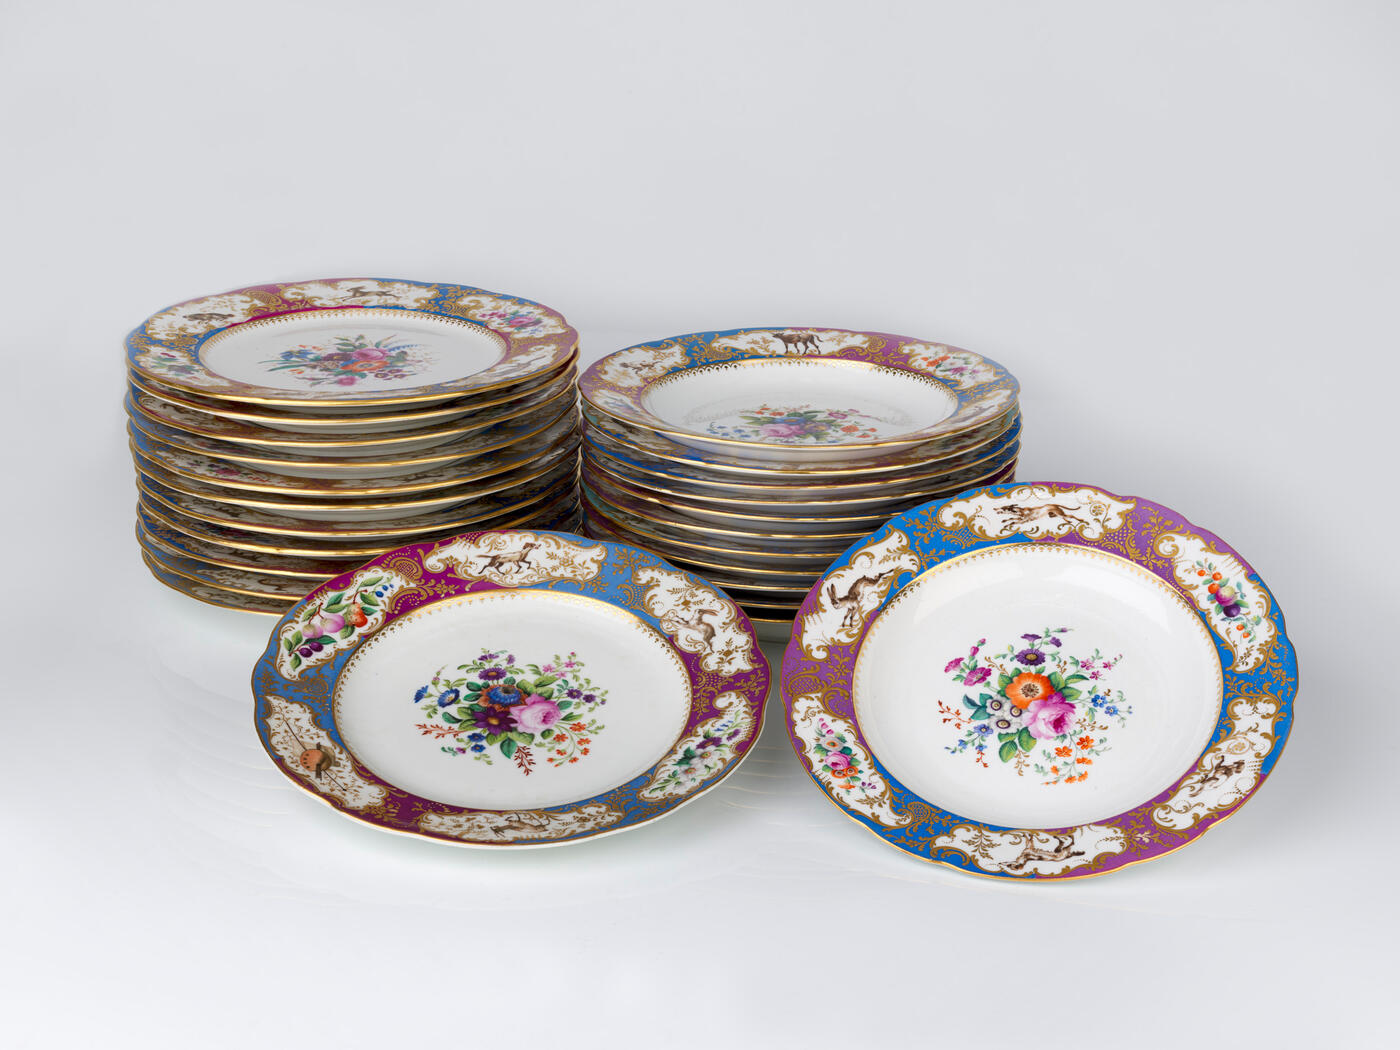 A Set of Twelve Dinner Plates from the Grand Duke Mikhail Pavlovich Service